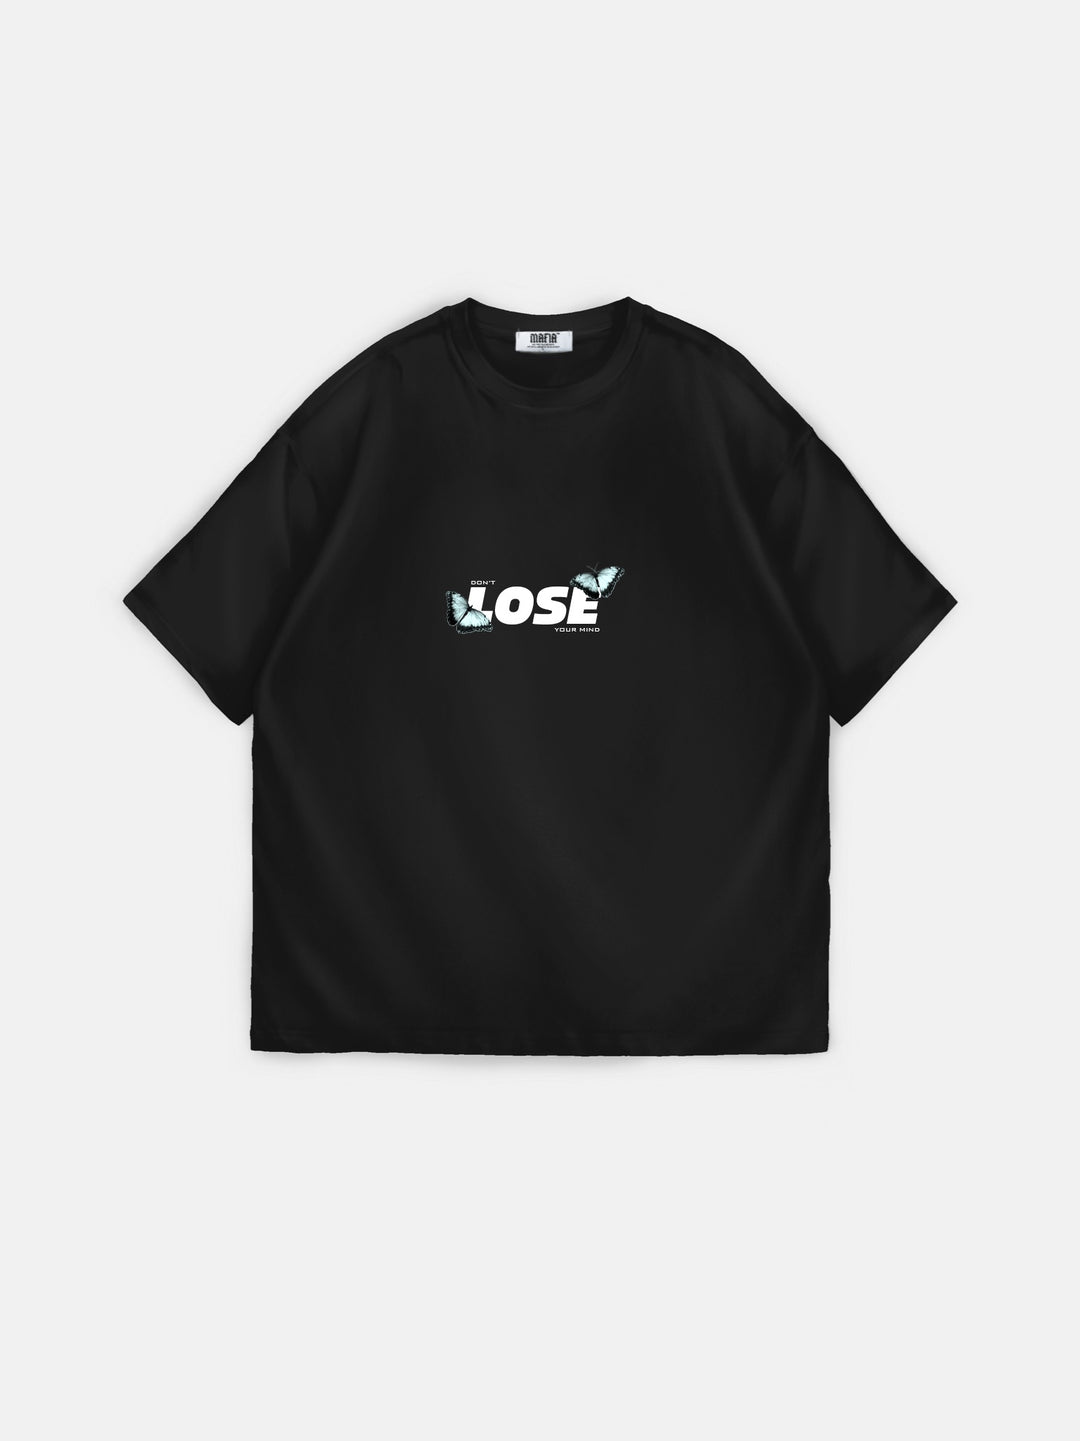 Oversize Lose T-shirt - Black